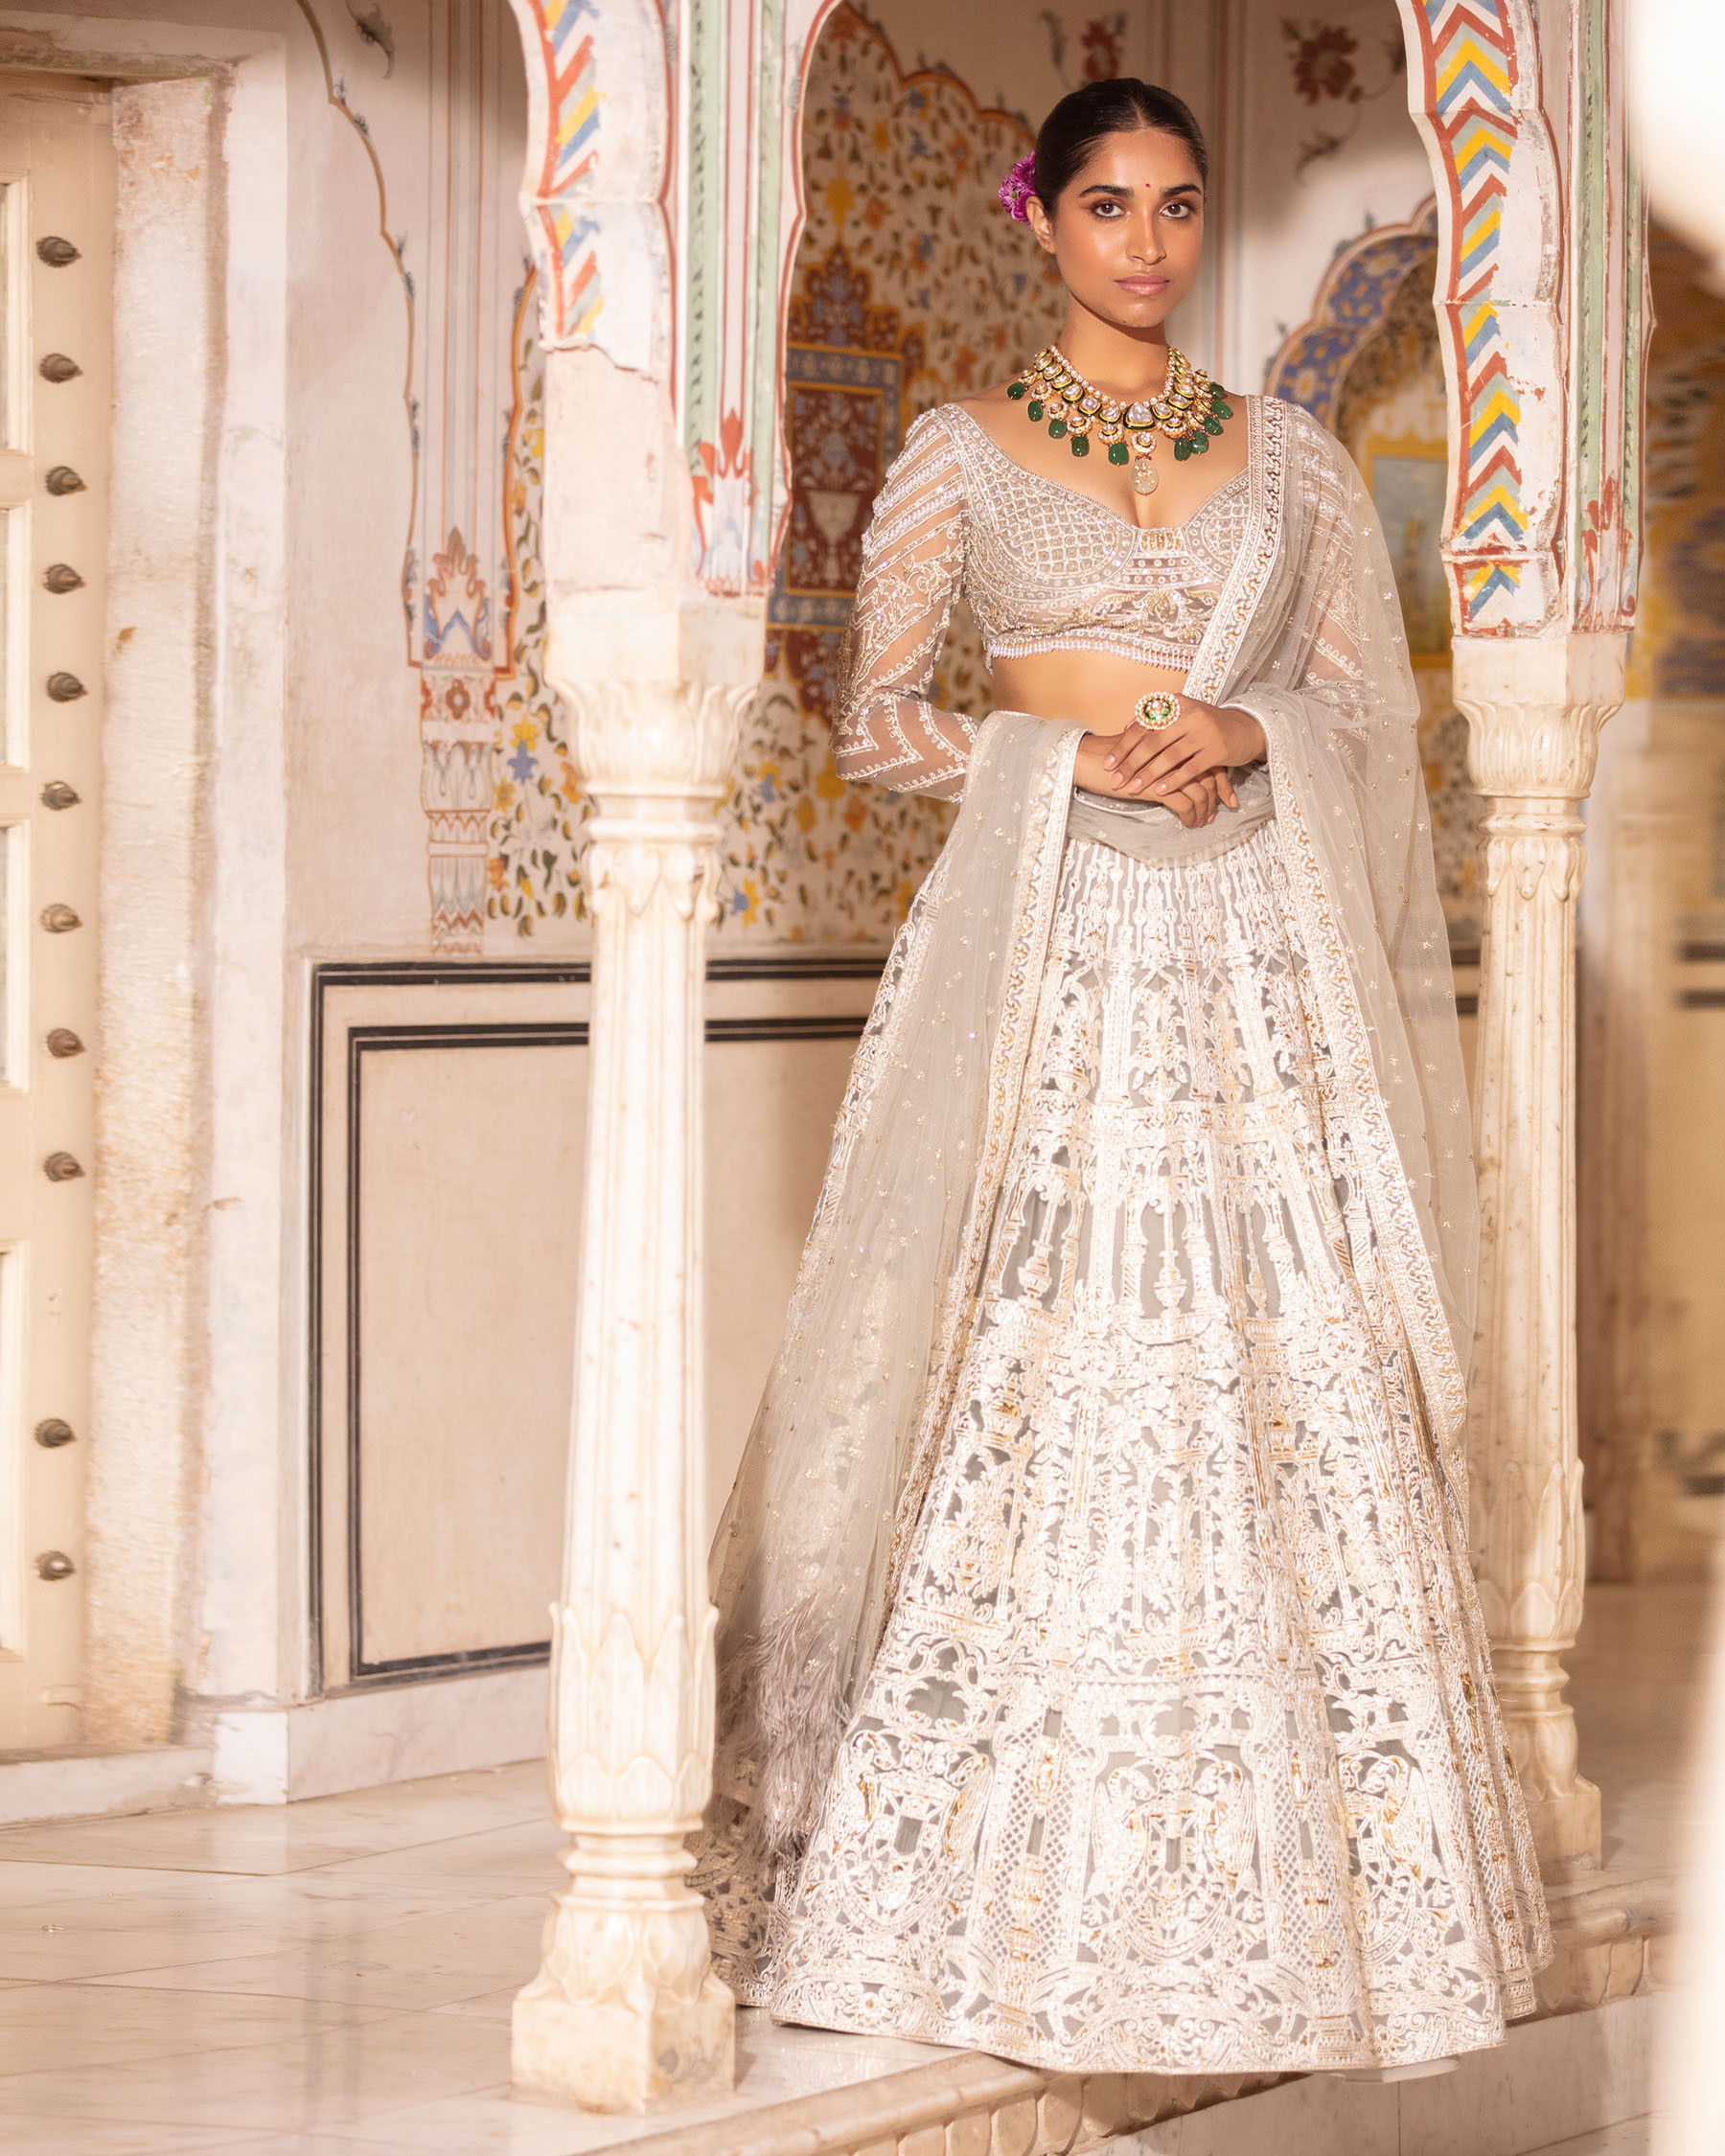 Buying Lehenga Online: A Modern Bride's Guide - Dress me Royal